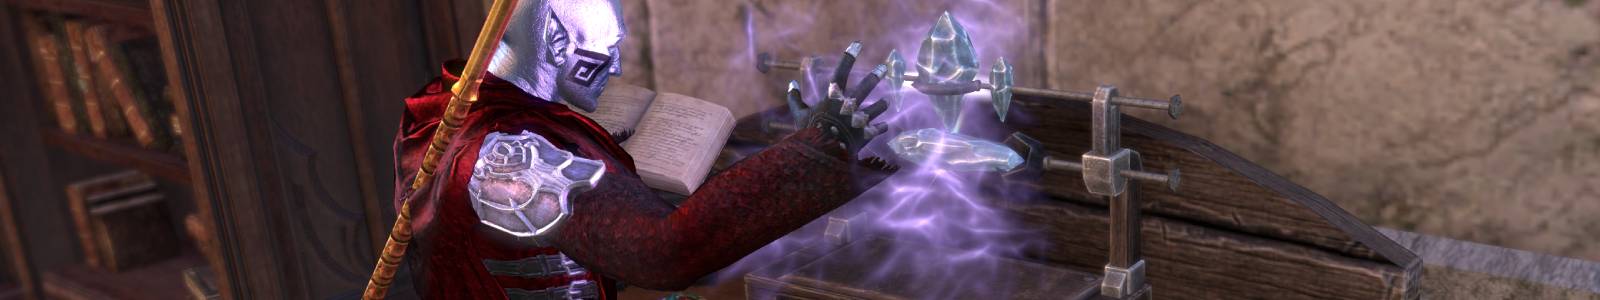 Enchantments, Glyphs and Runes in ESO (Elder Scrolls Online) header